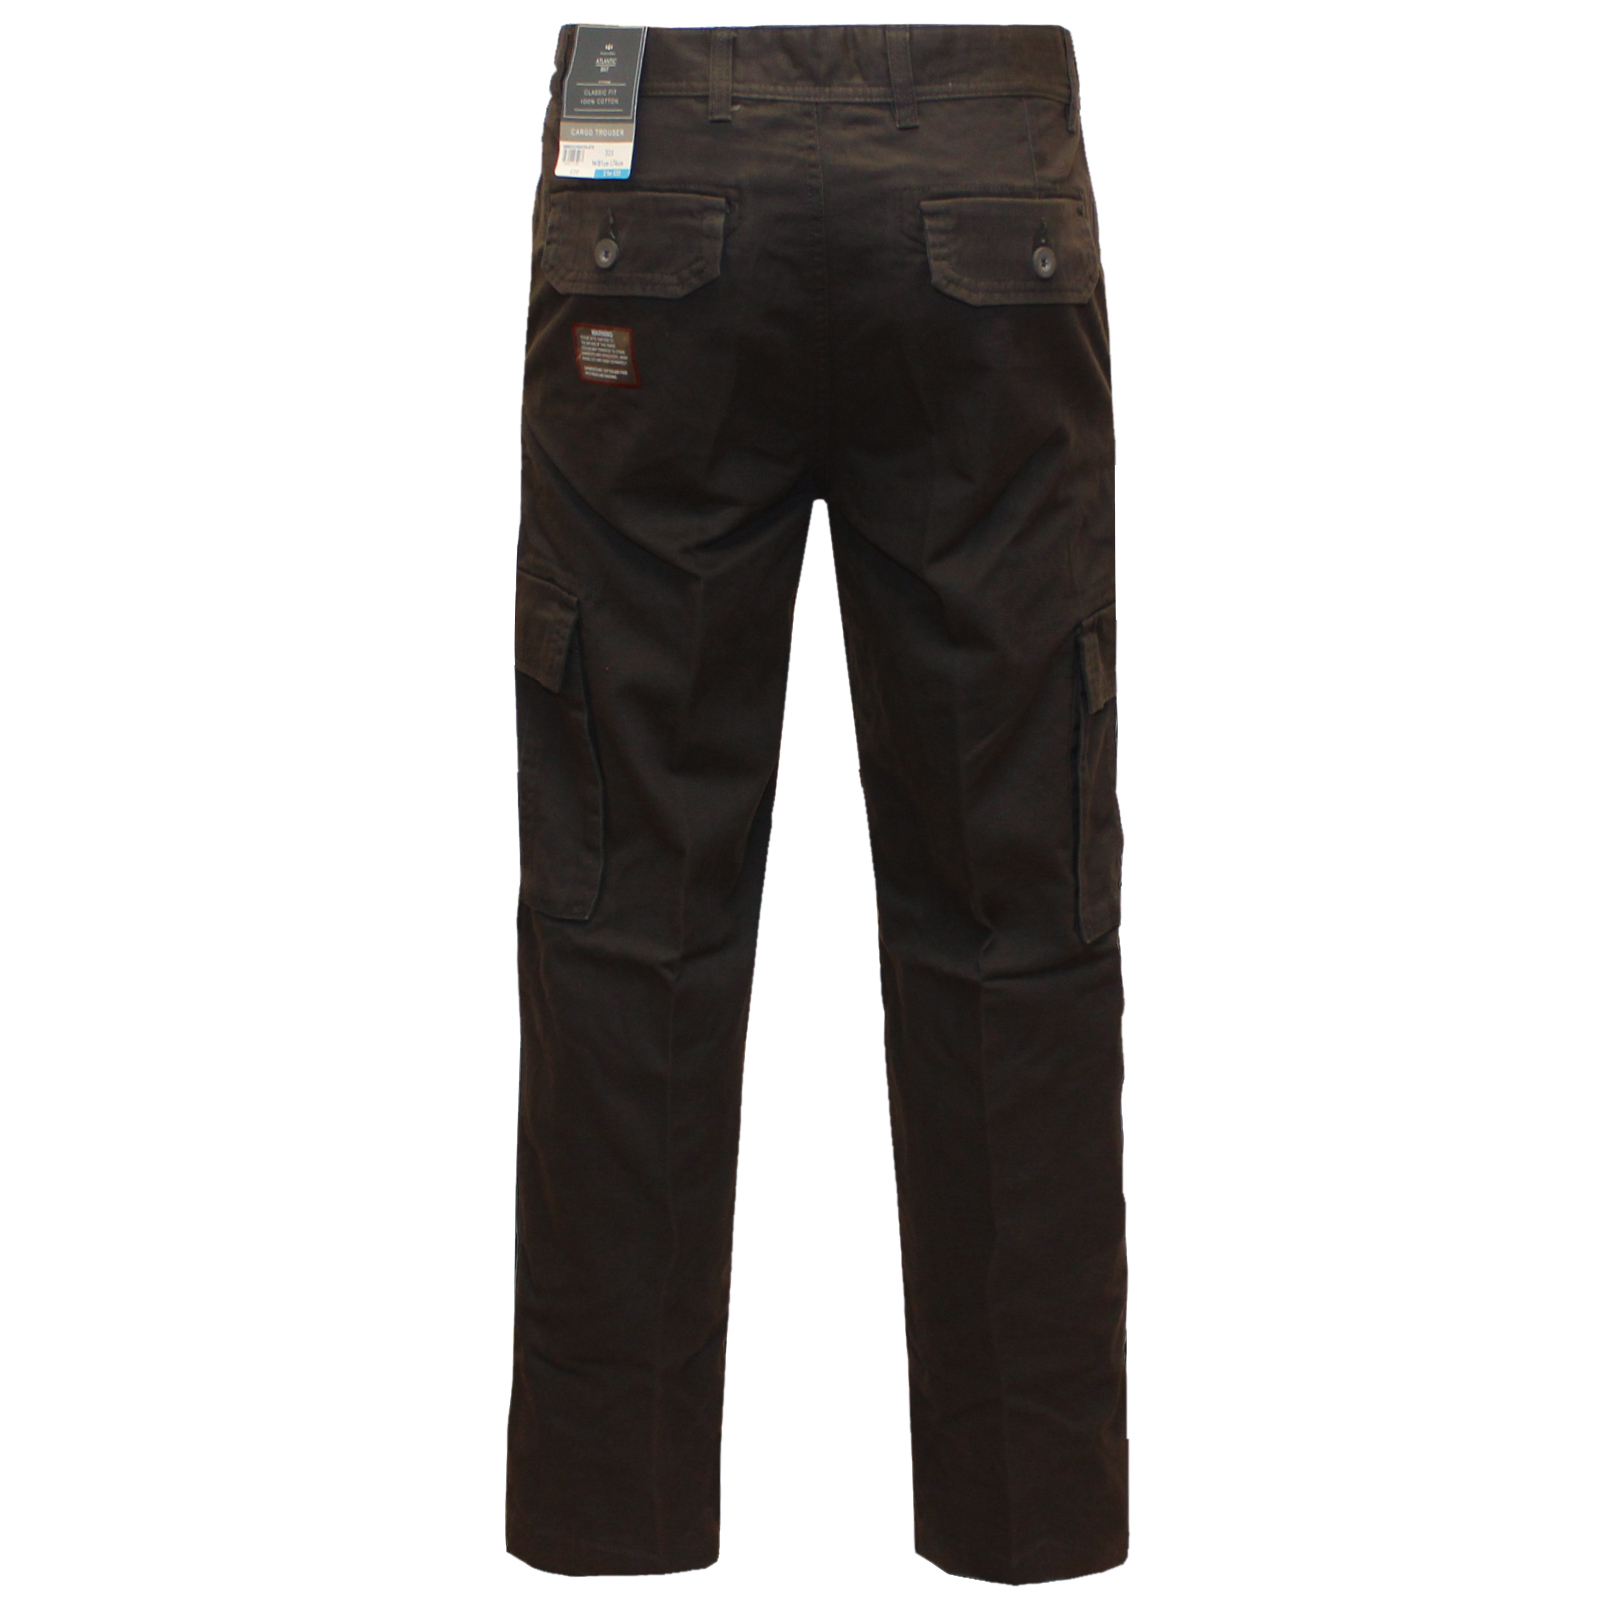 Mens Formal Work Trousers Cotton BHS Brand Work Multi Pockets Waist Sizes 32-46 